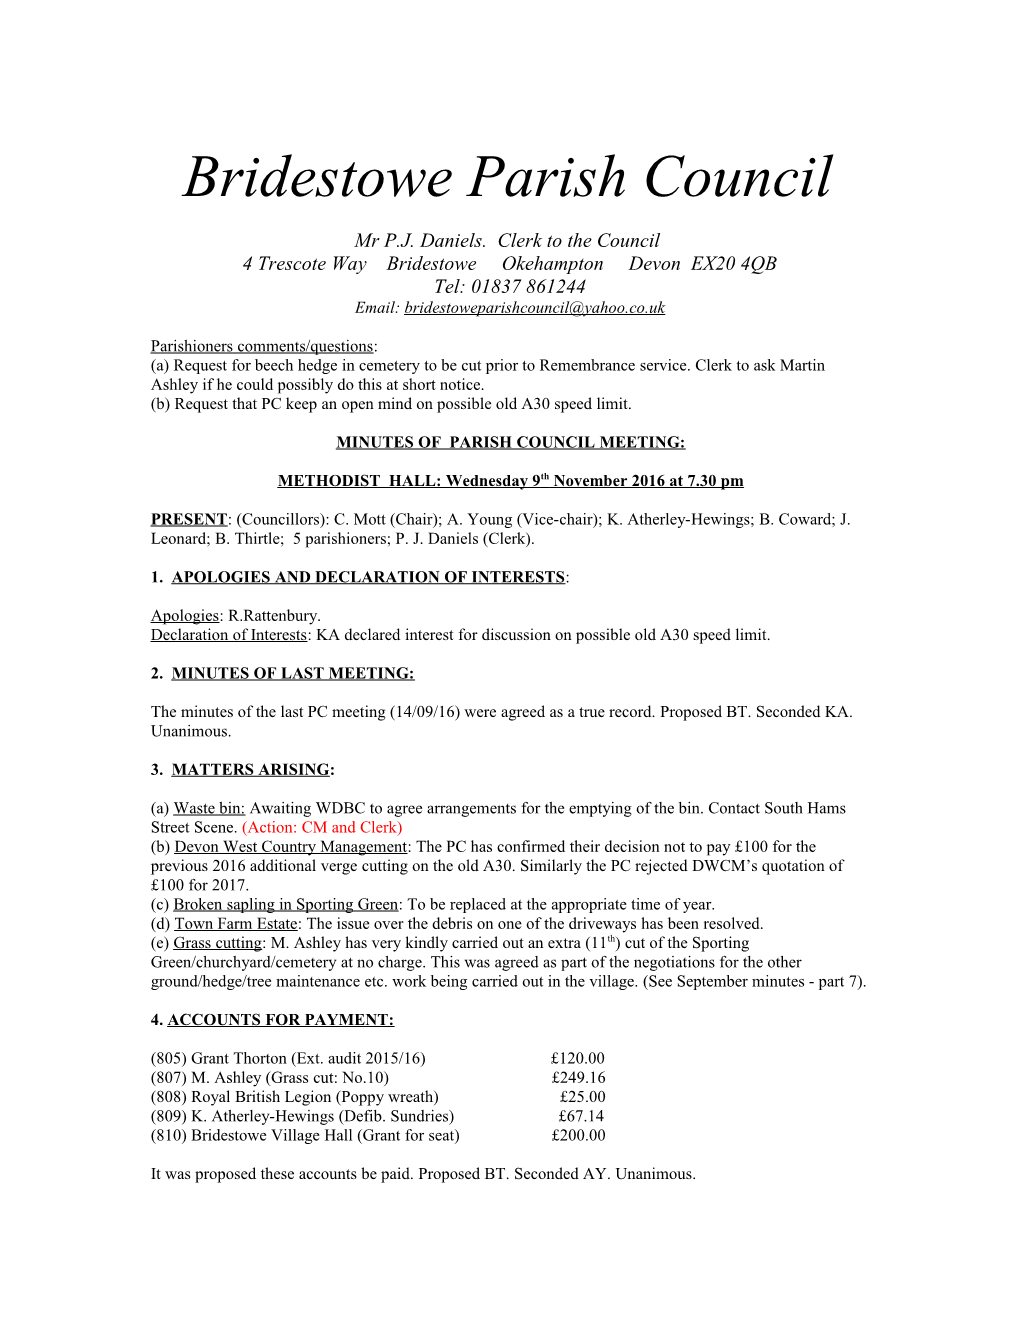 Bridestowe Parish Council s1